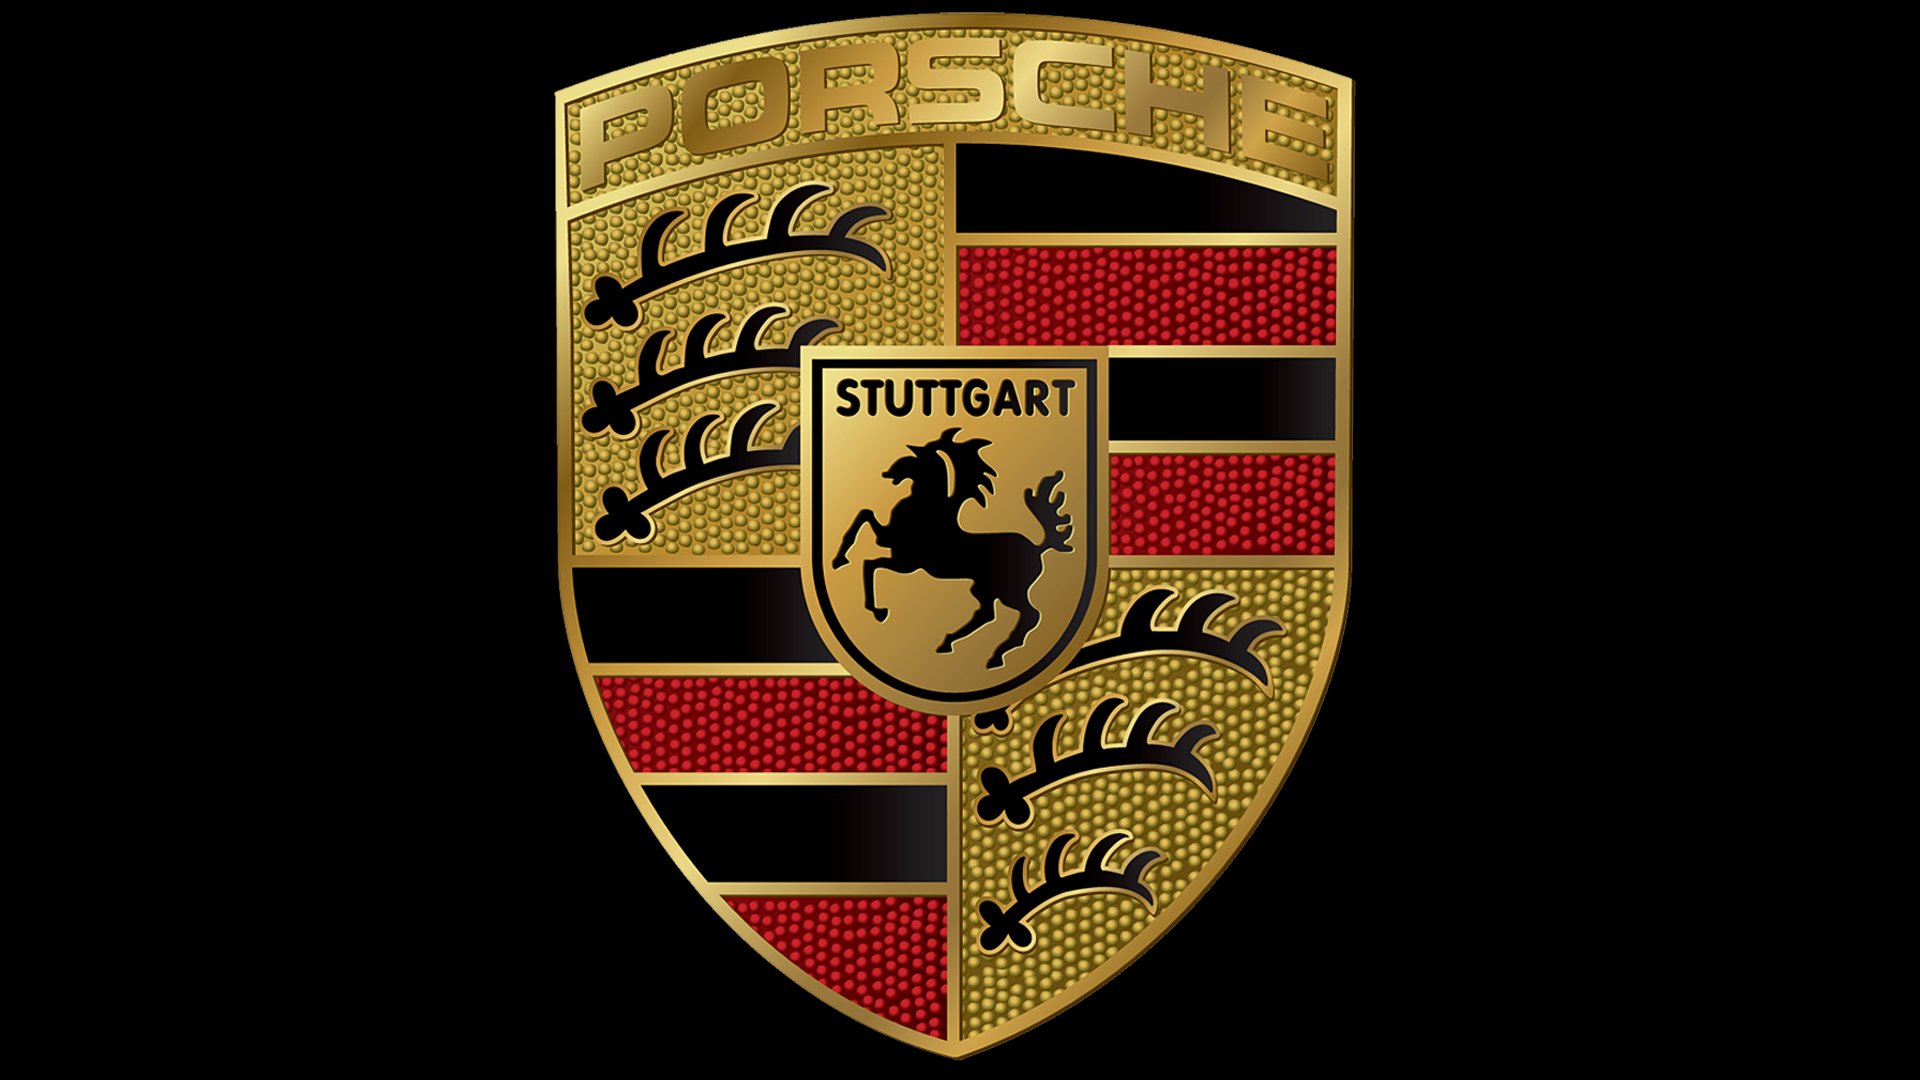 Porsche Car Logos And Emblem At The Car Body Editorial Stock Photo | My ...